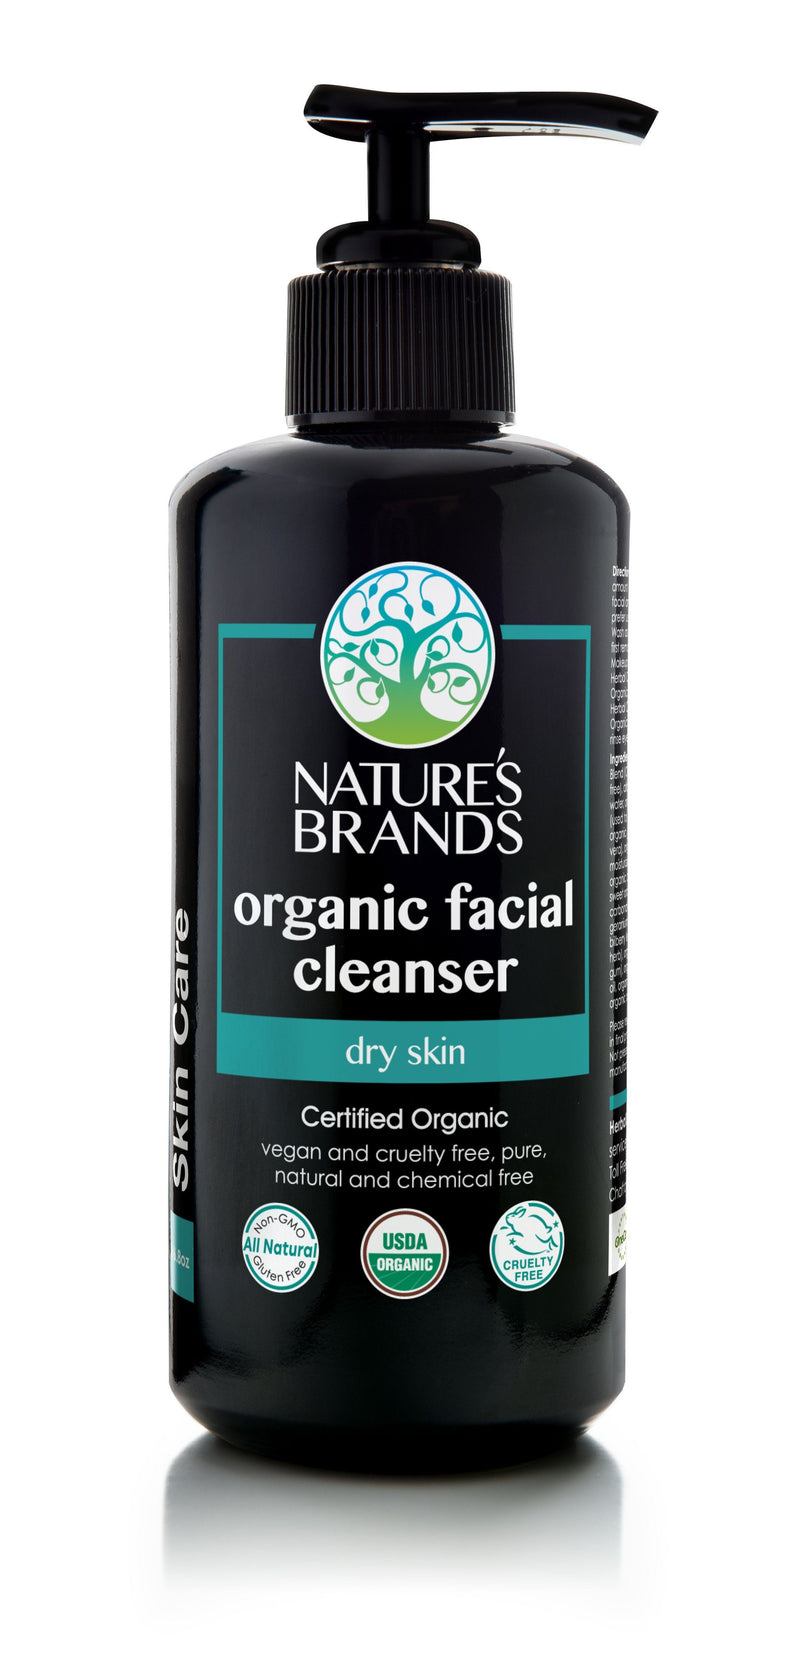 Herbal Choice Mari Organic Facial Cleanser, Dry Skin - Herbal Choice Mari Organic Facial Cleanser, Dry Skin - Herbal Choice Mari Organic Facial Cleanser, Dry Skin